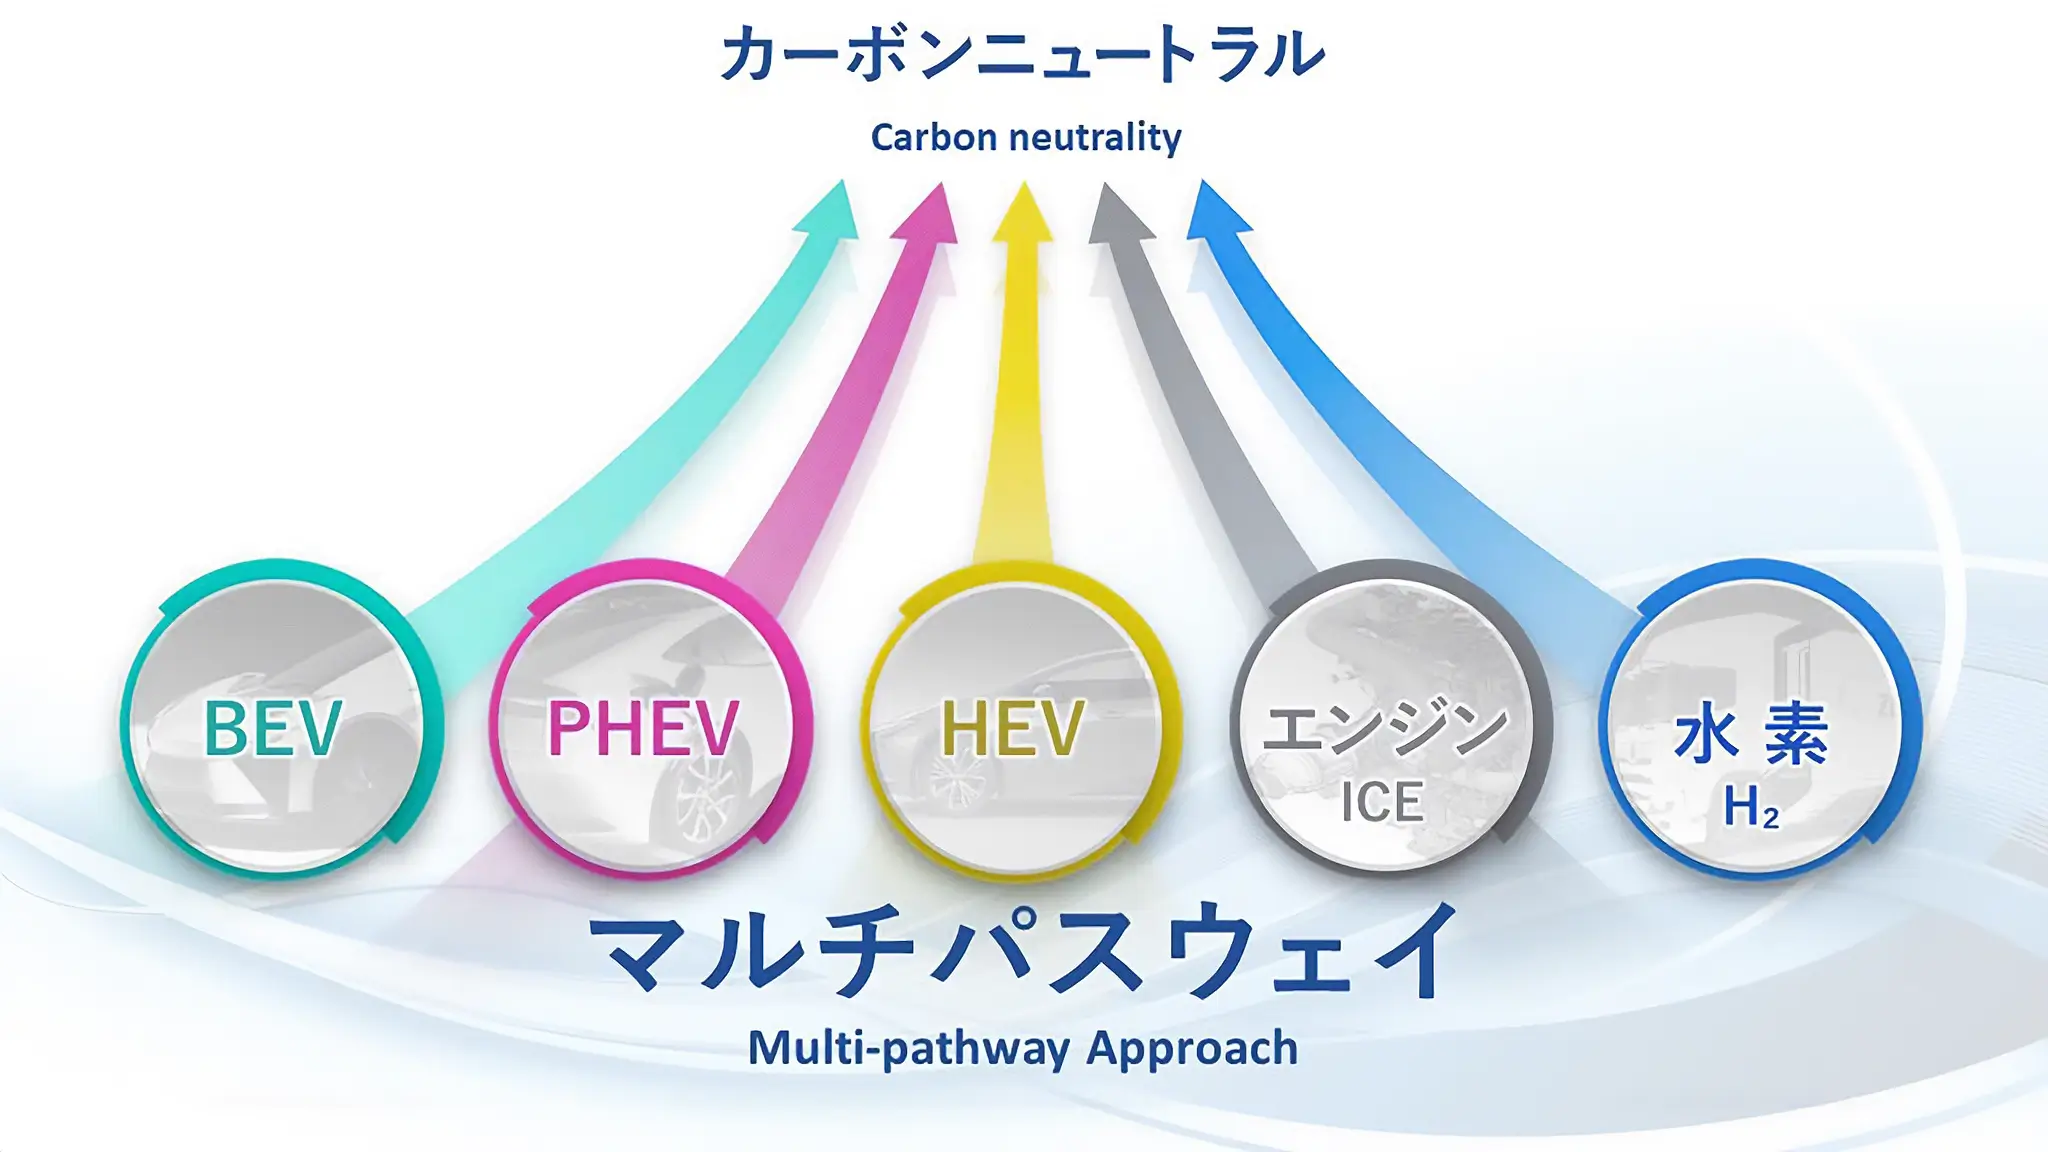 Gráfico da Toyota - Multi-pathway approach